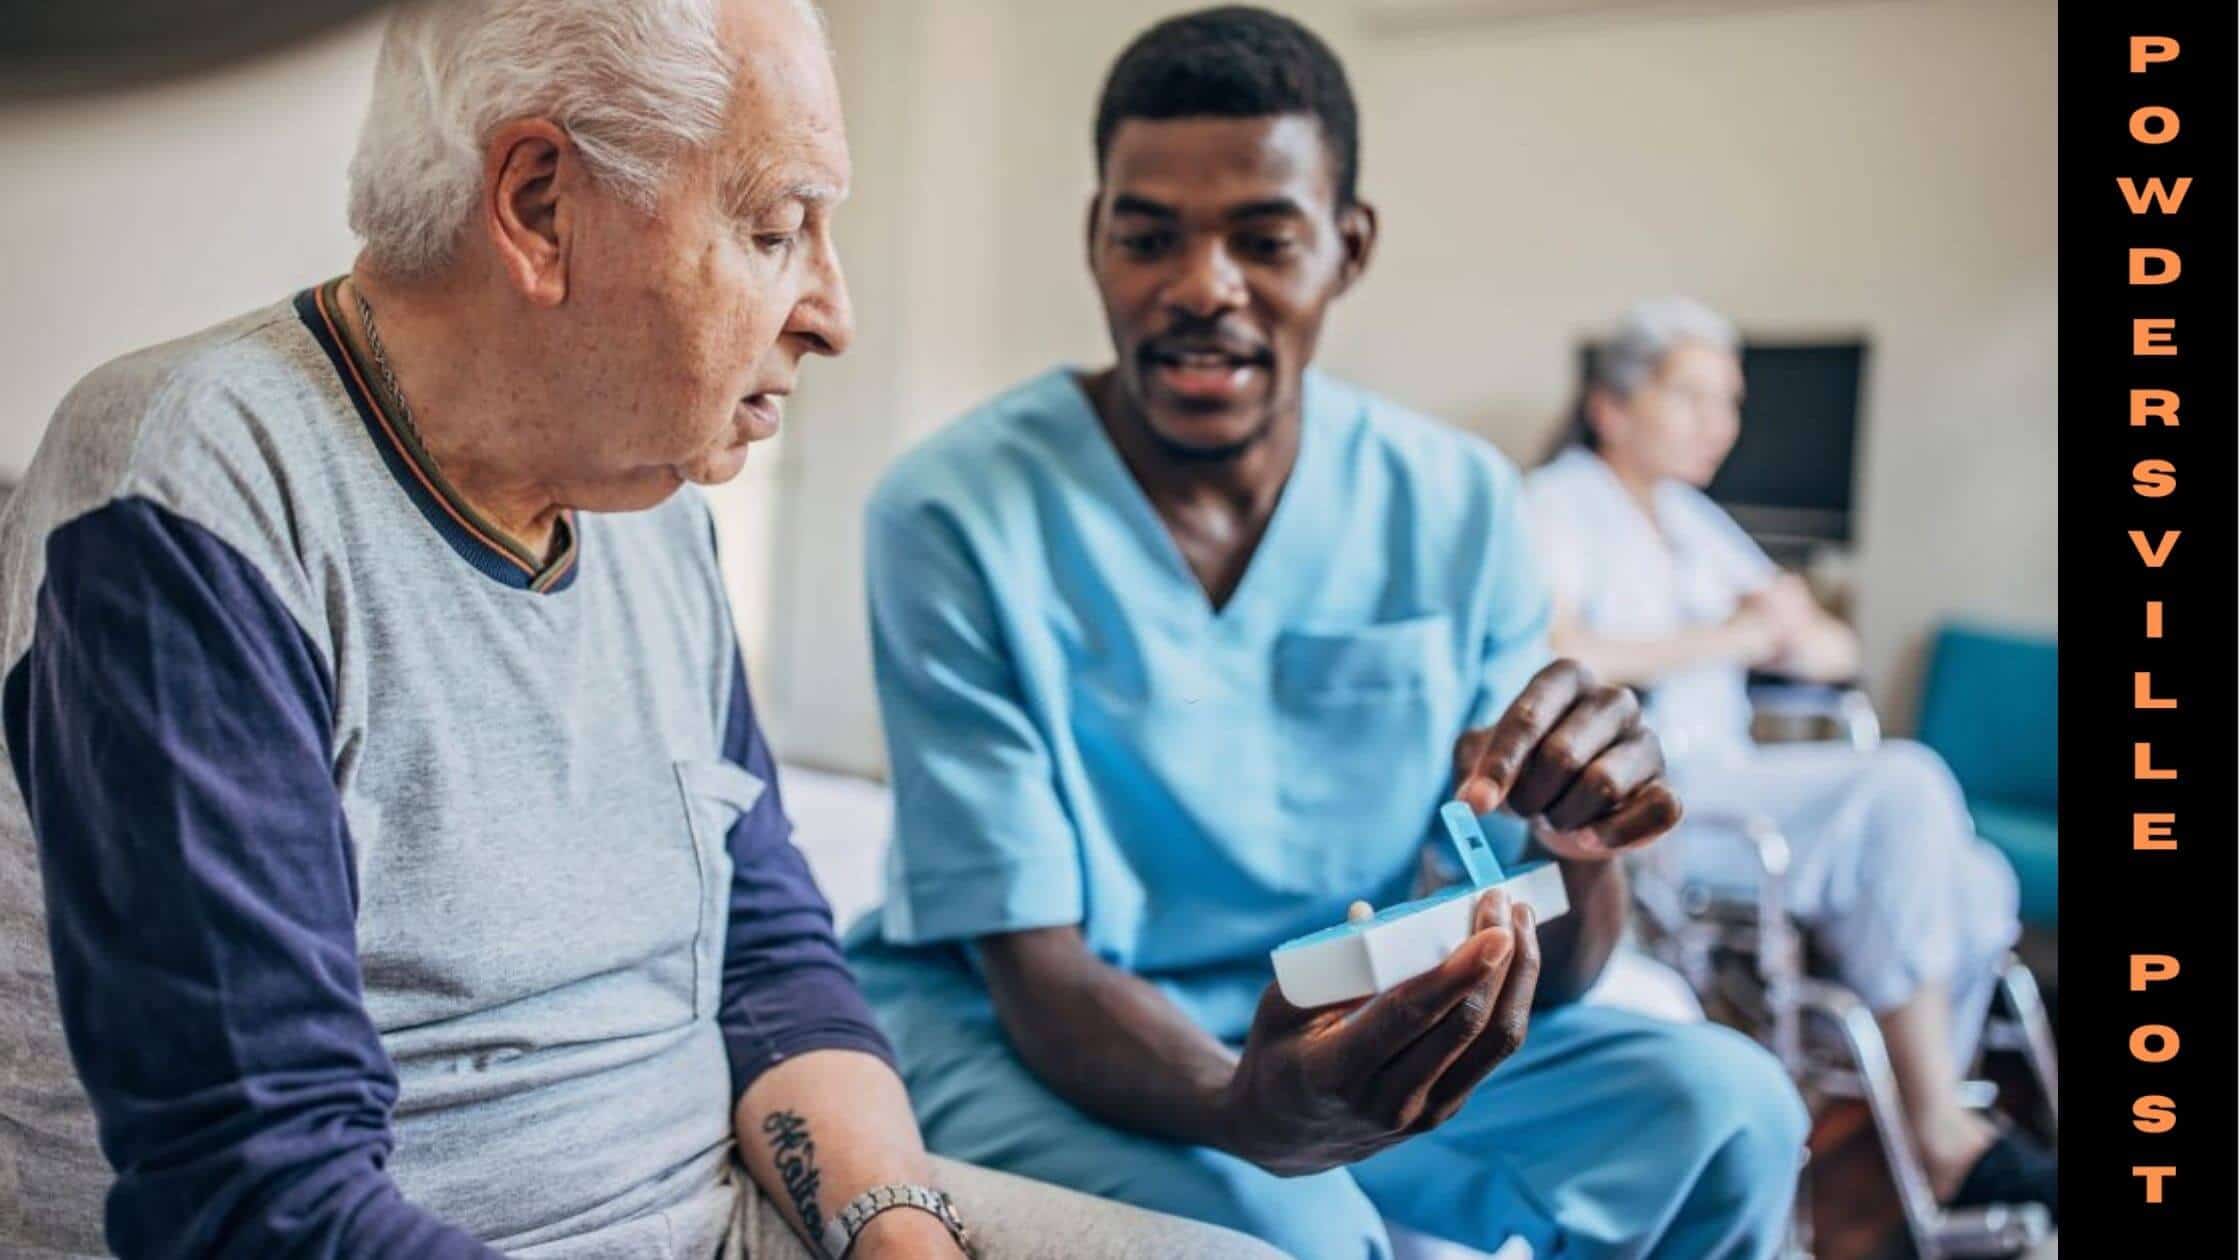 Assisting Senior Citizens Through The Health Care System